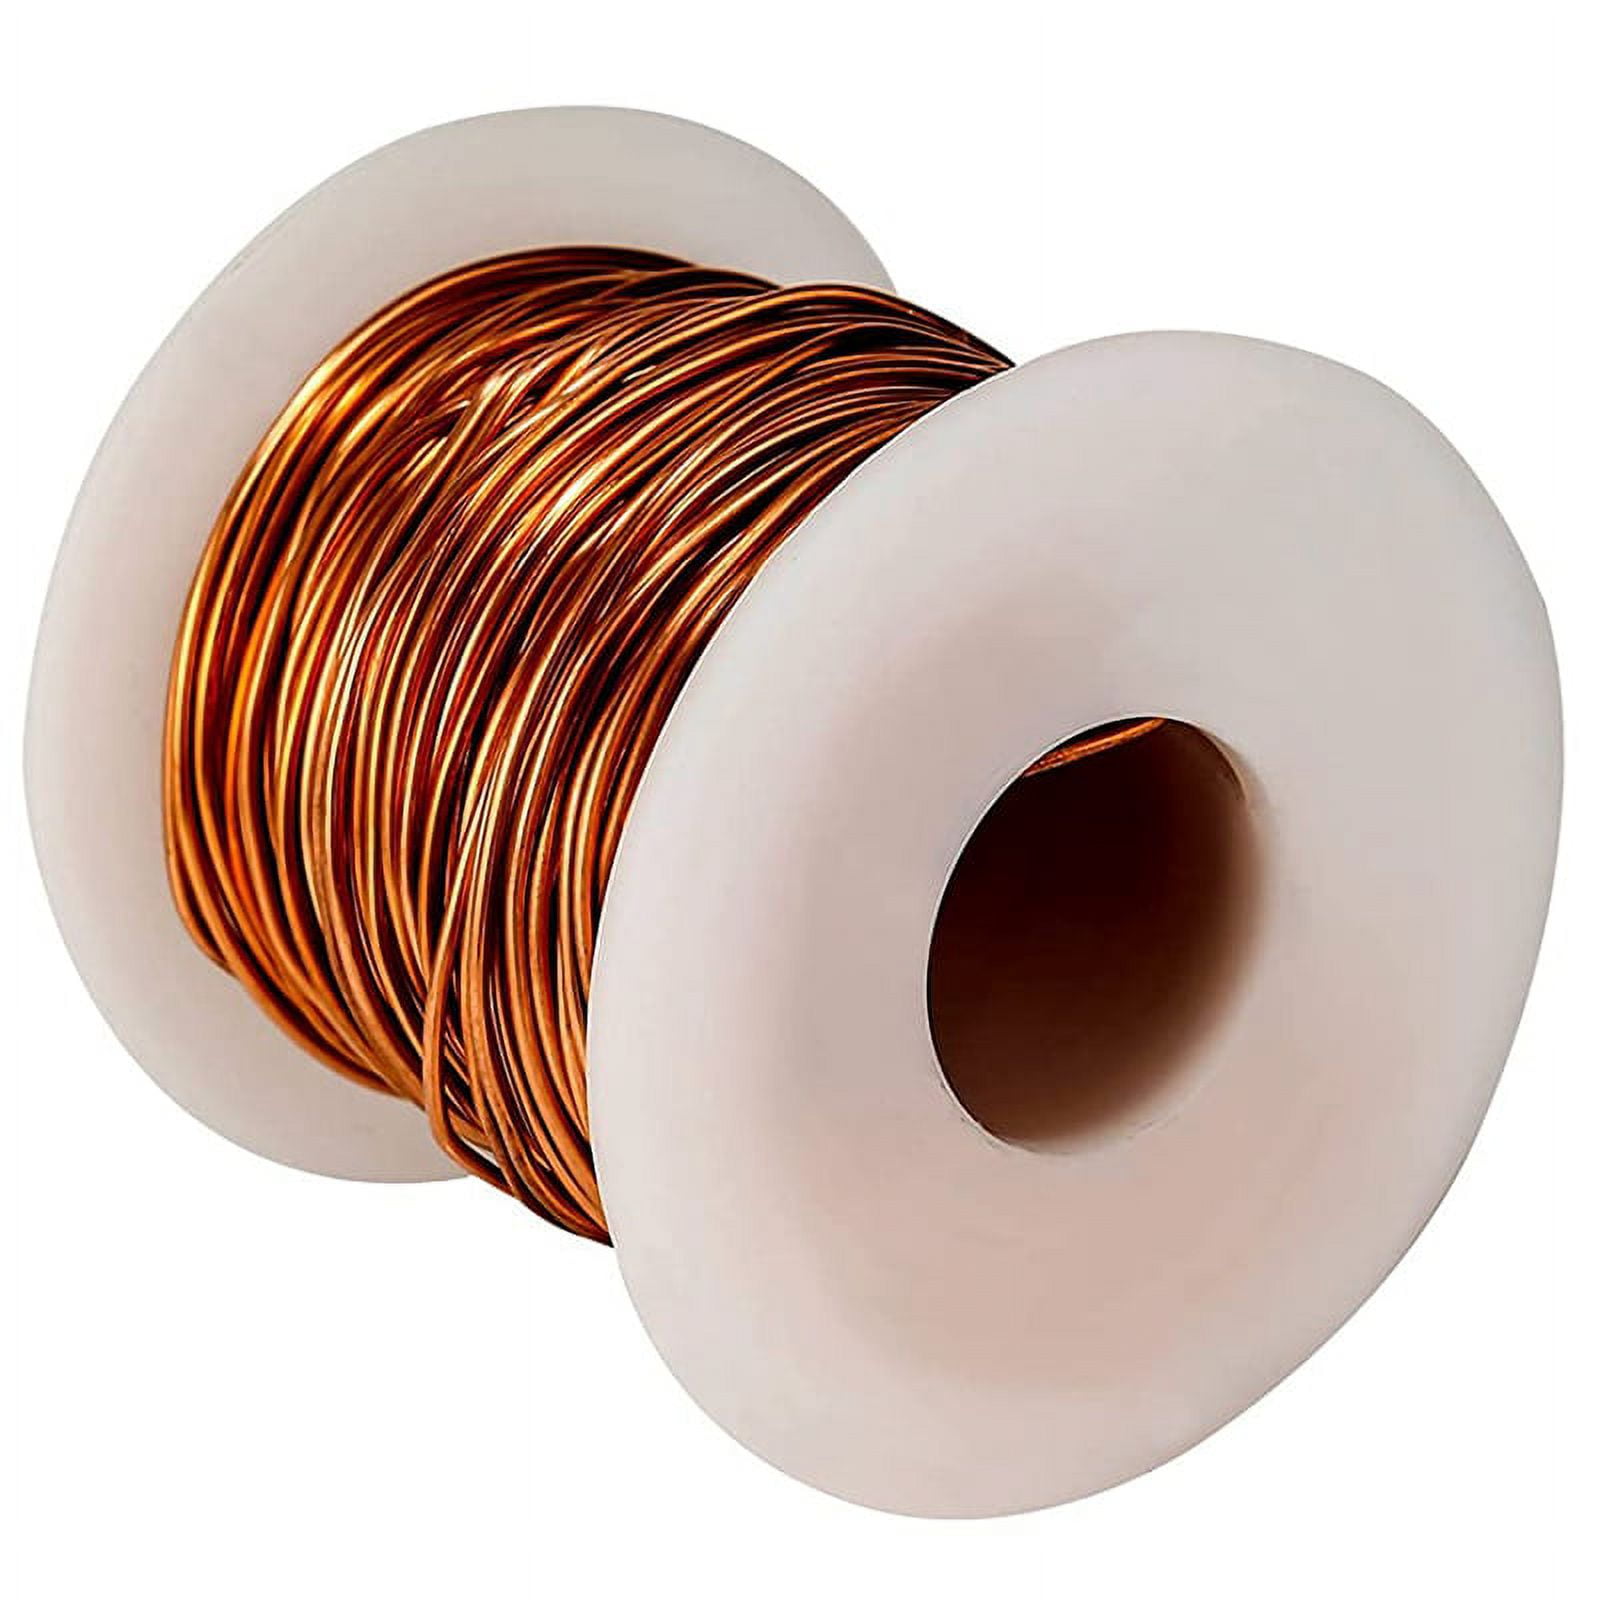 99.9% Soft Copper Wire, 18 Gauge/1mm Diameter 236 Feet/72m 1.1 Pound Spool